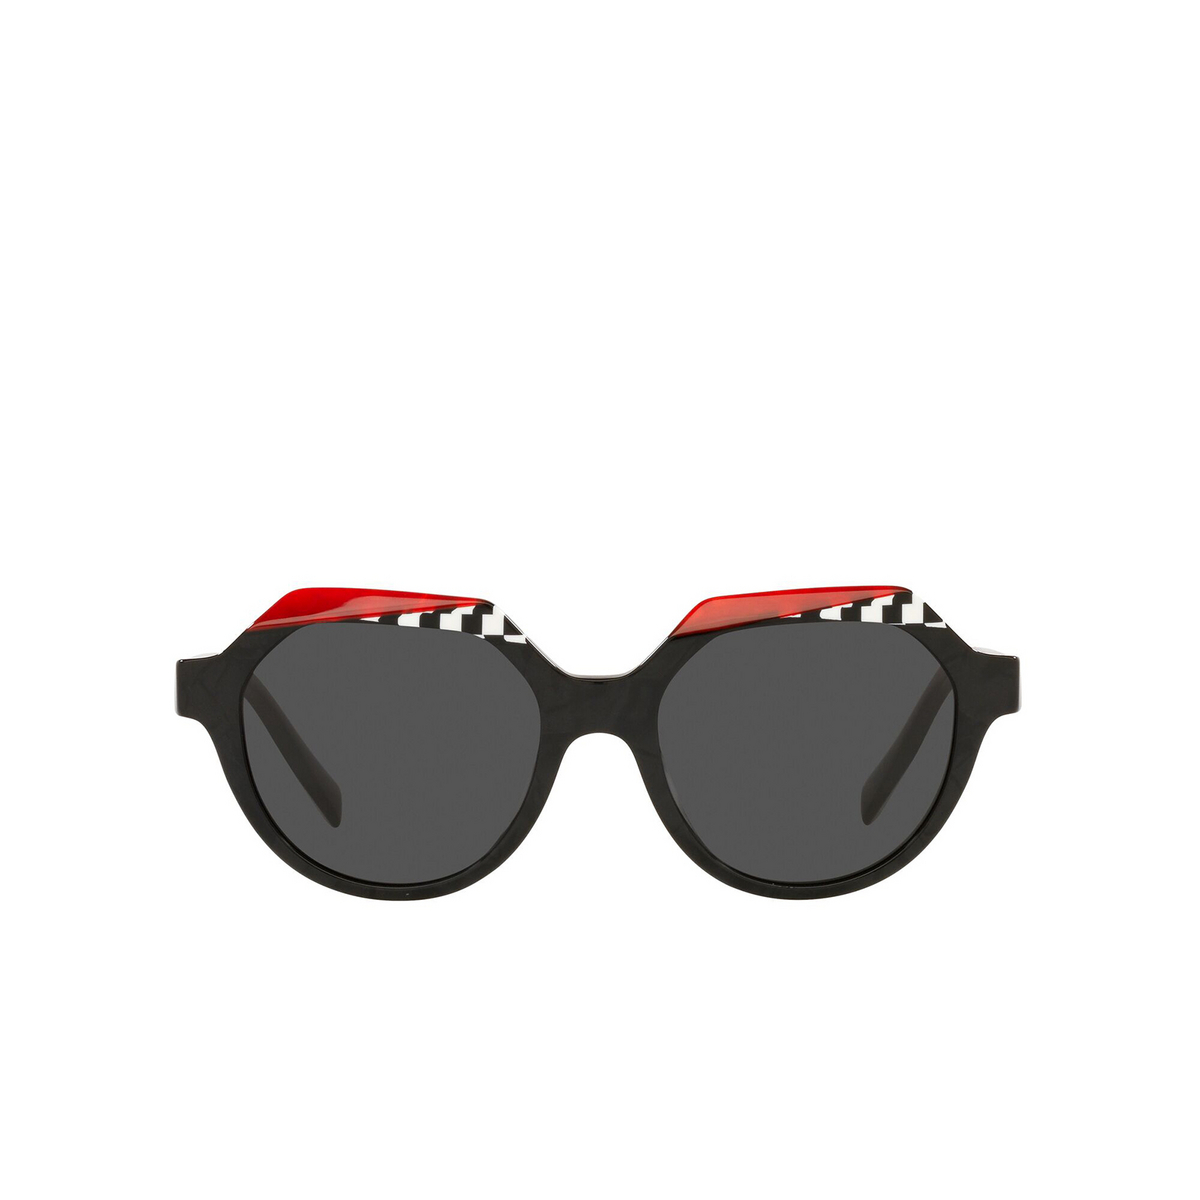 Alain Mikli® Irregular Sunglasses: Alete A05067 color Noir Mikli / Black White Dam./ Ro 001/87 - front view.